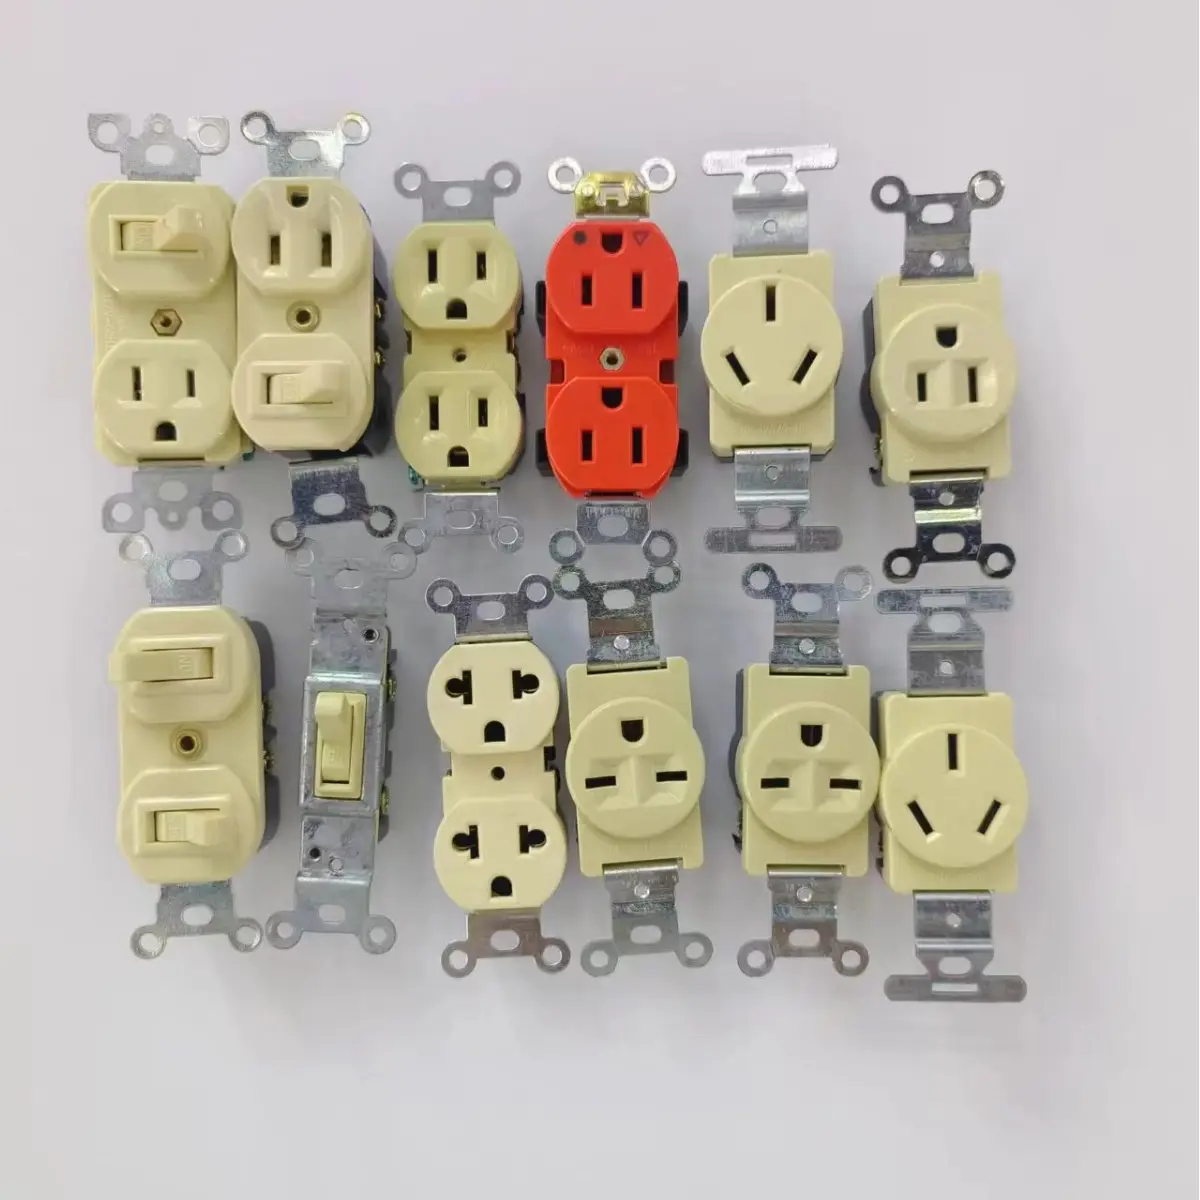 Orange Hospital Grade Duplex Receptacle America 20A 125V Electric Outlet Socket Wall Switch Electrical Power Socket